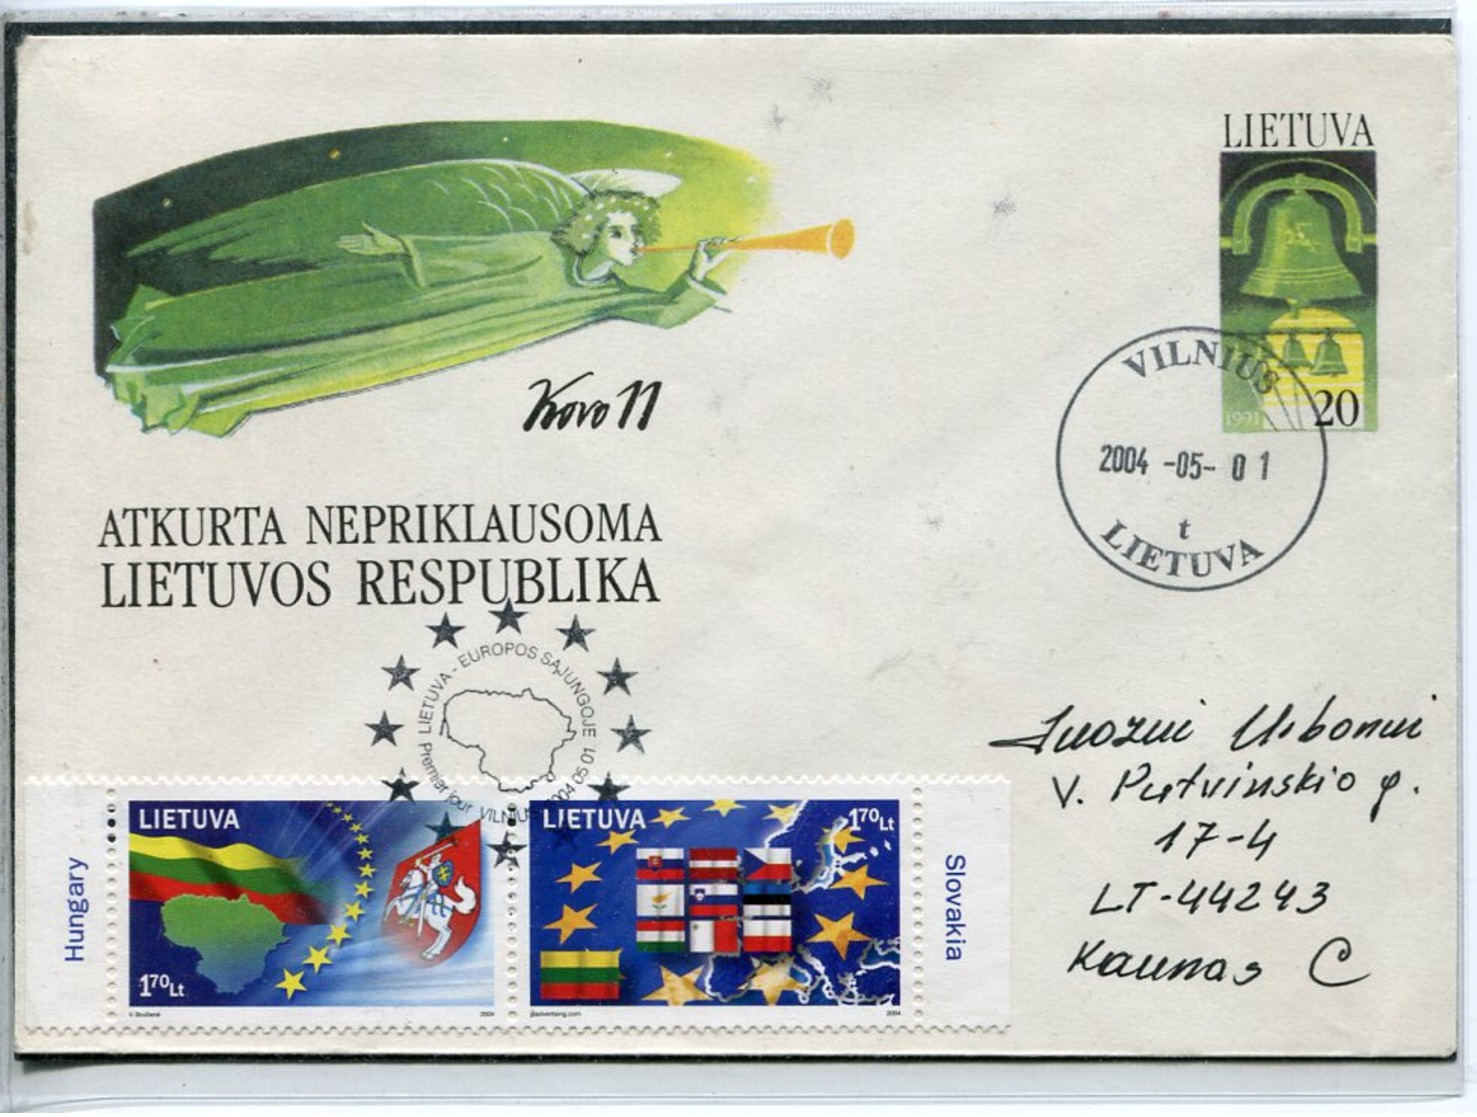 LITHUANIA 2004 COVER EUROPA UNIO FLAG SLOVAKIA HUNGARY SPECIAL CANCEL 2004 05 01 - Lithuania